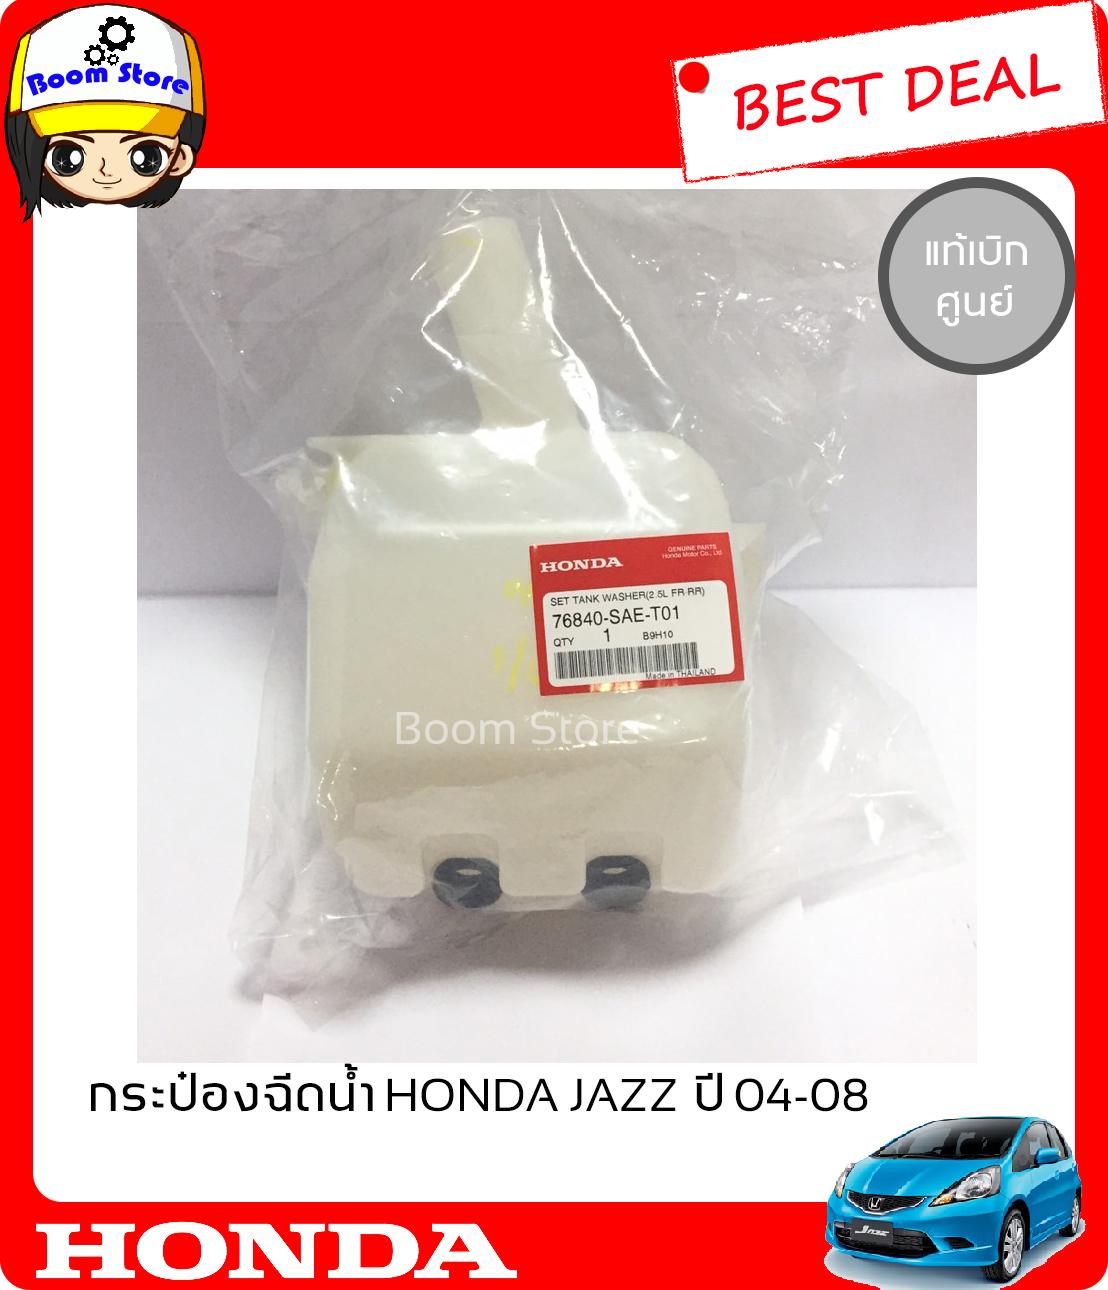 HONDA กระป๋องฉีดน้ำ สำหรับรถยนต์ HONDA JAZZ 2004-2008/City 2003-2008 (สินค้าแท้เบิกศูนย์)No.76840SAET01